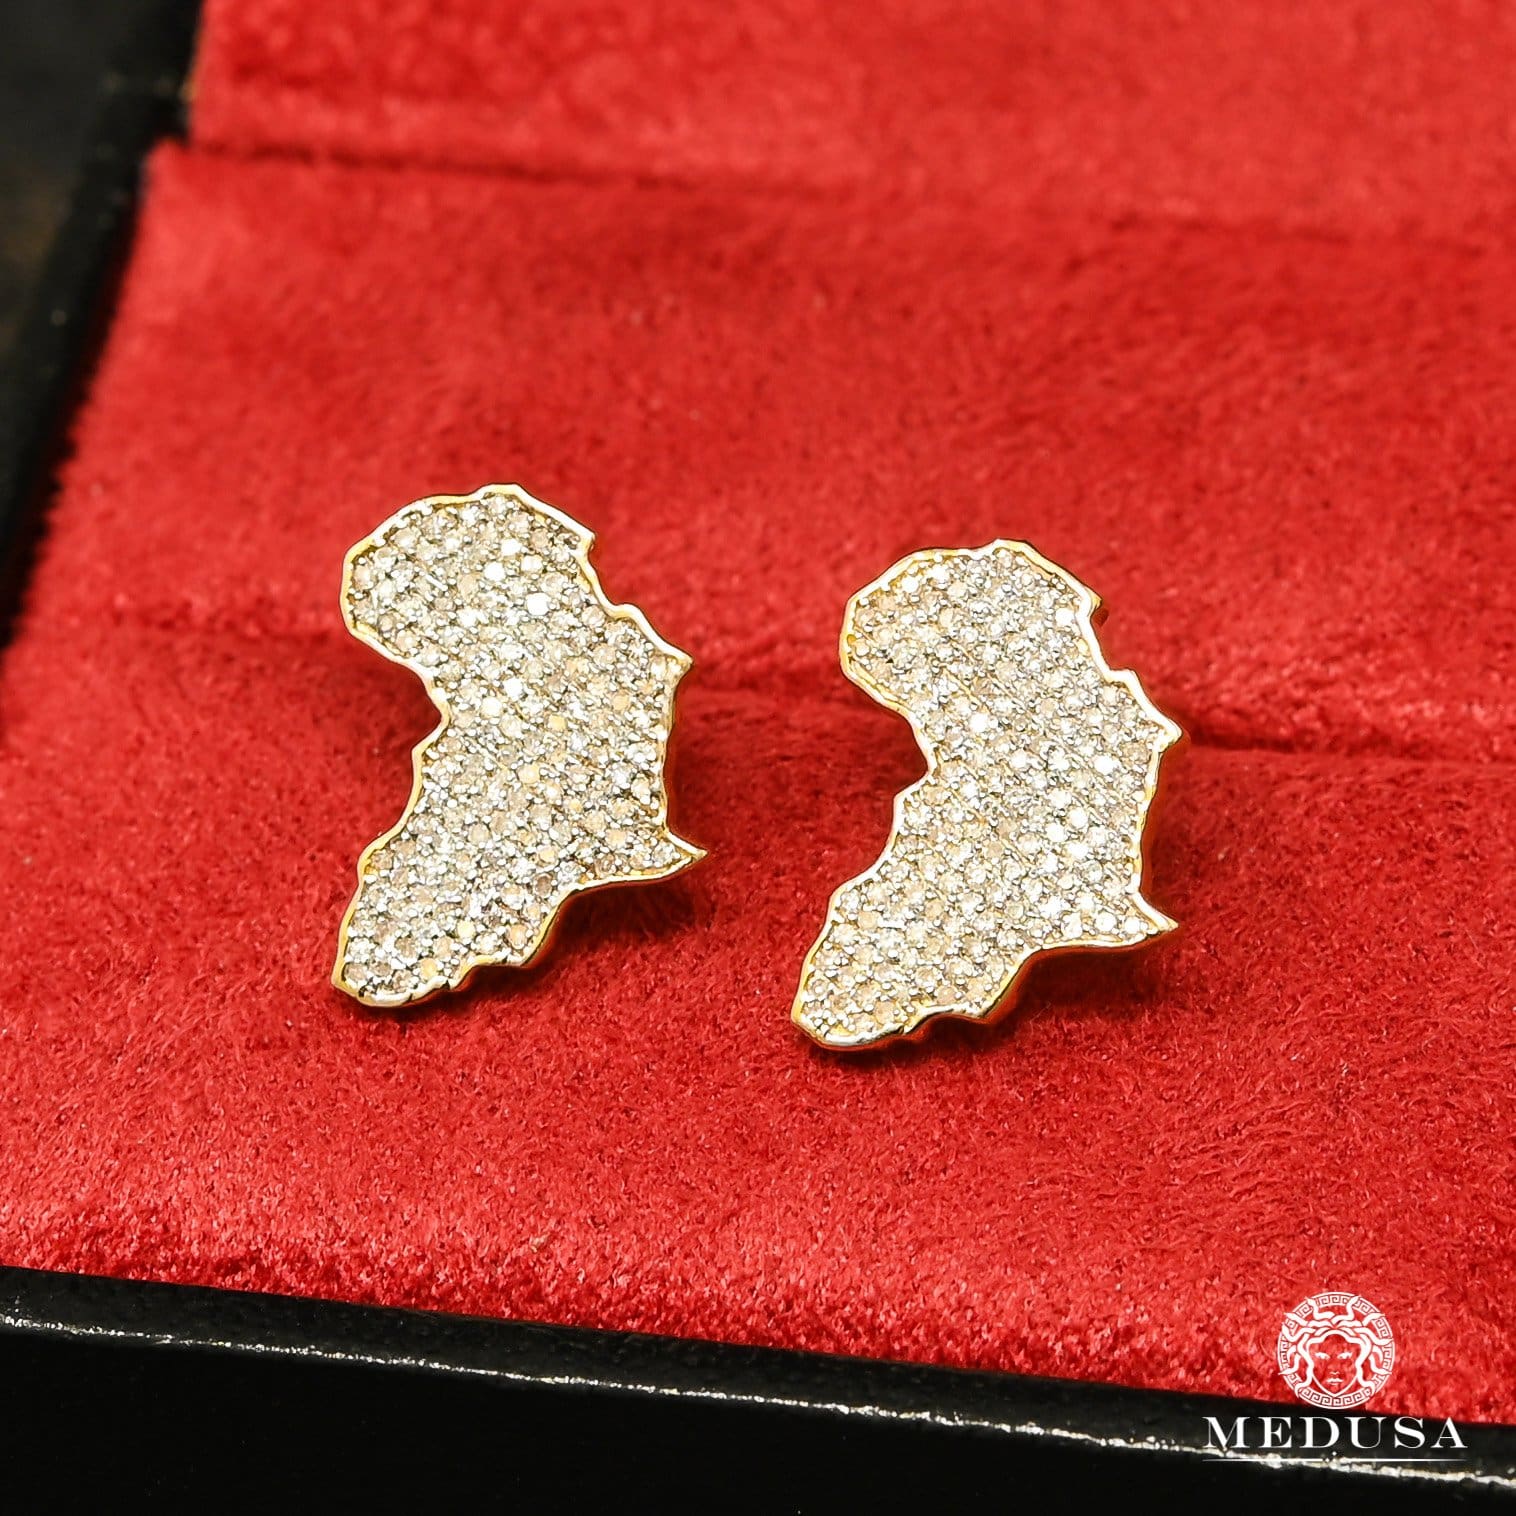 10K Gold Diamond Studs | Earrings Studs D23 - Africa Yellow Gold